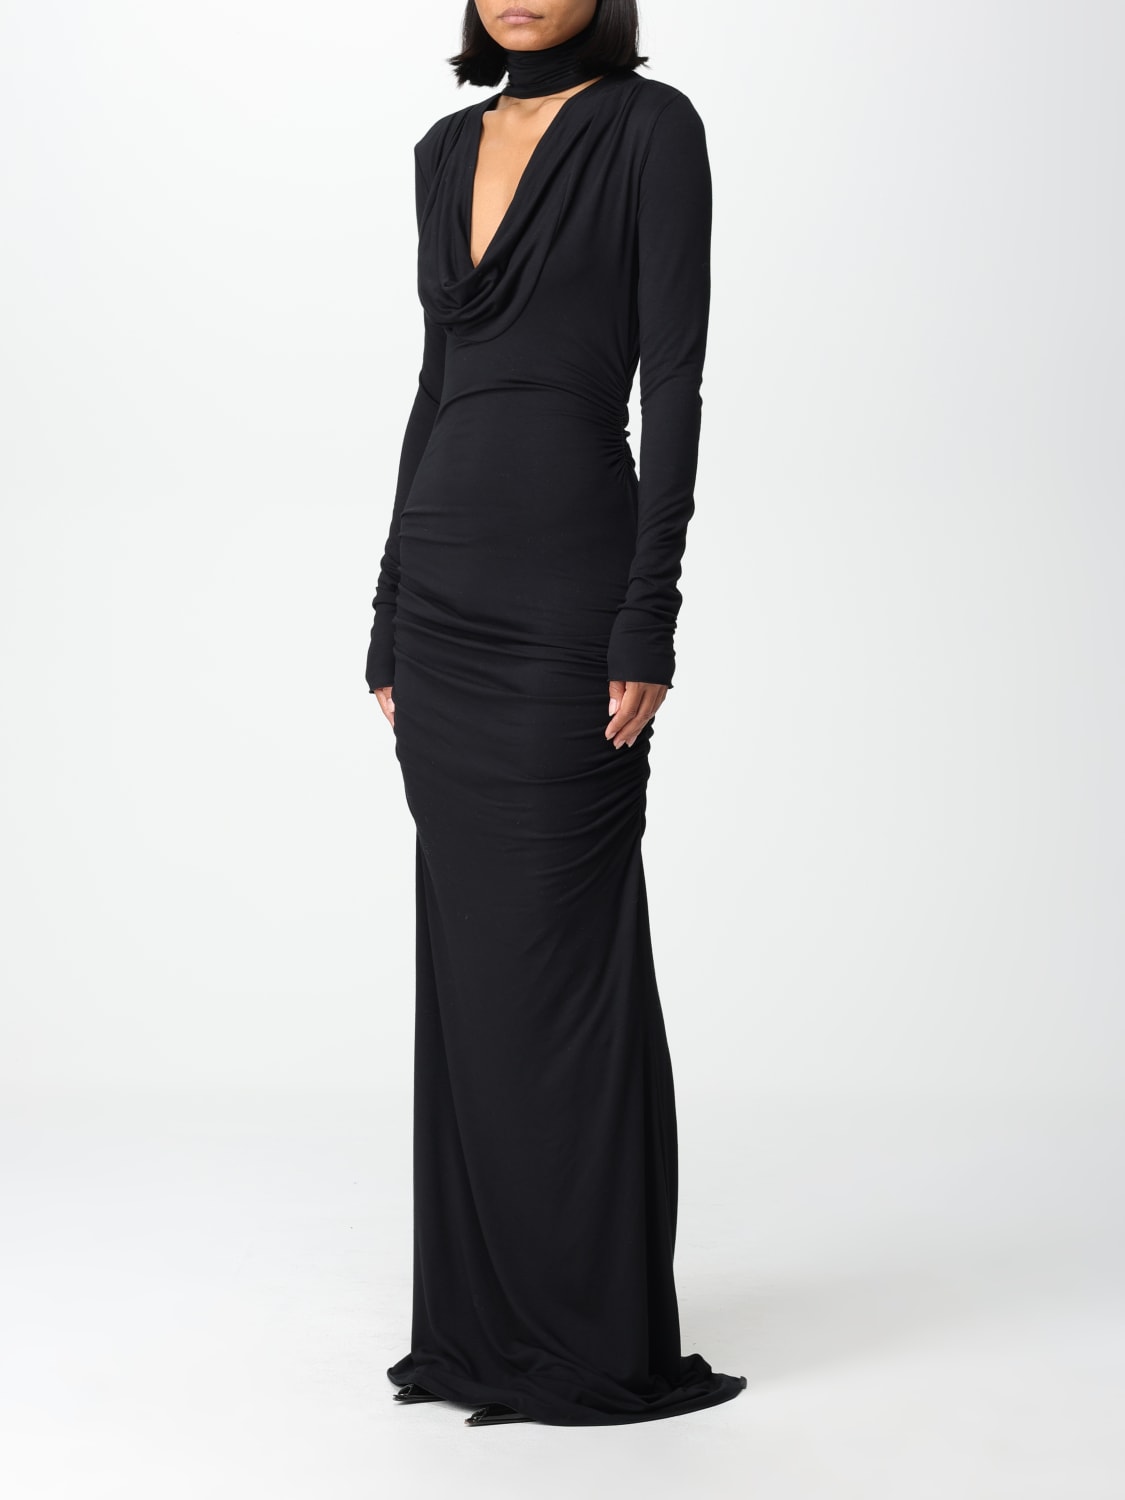 BLUMARINE: dress for woman - Black | Blumarine dress 4A048A online on ...